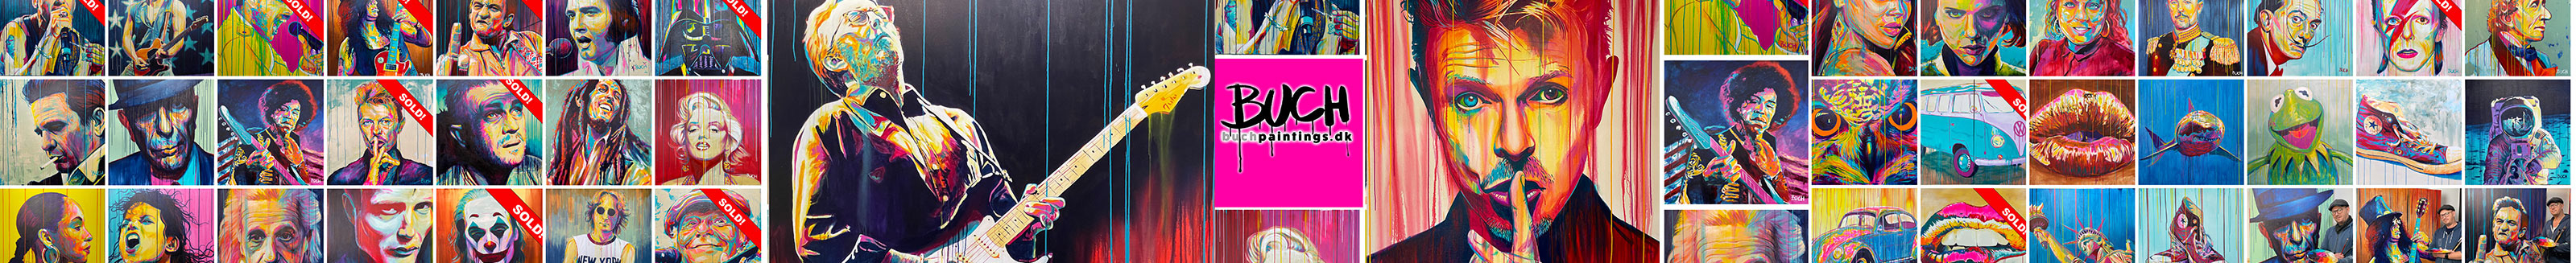 Allan Buch's profile banner